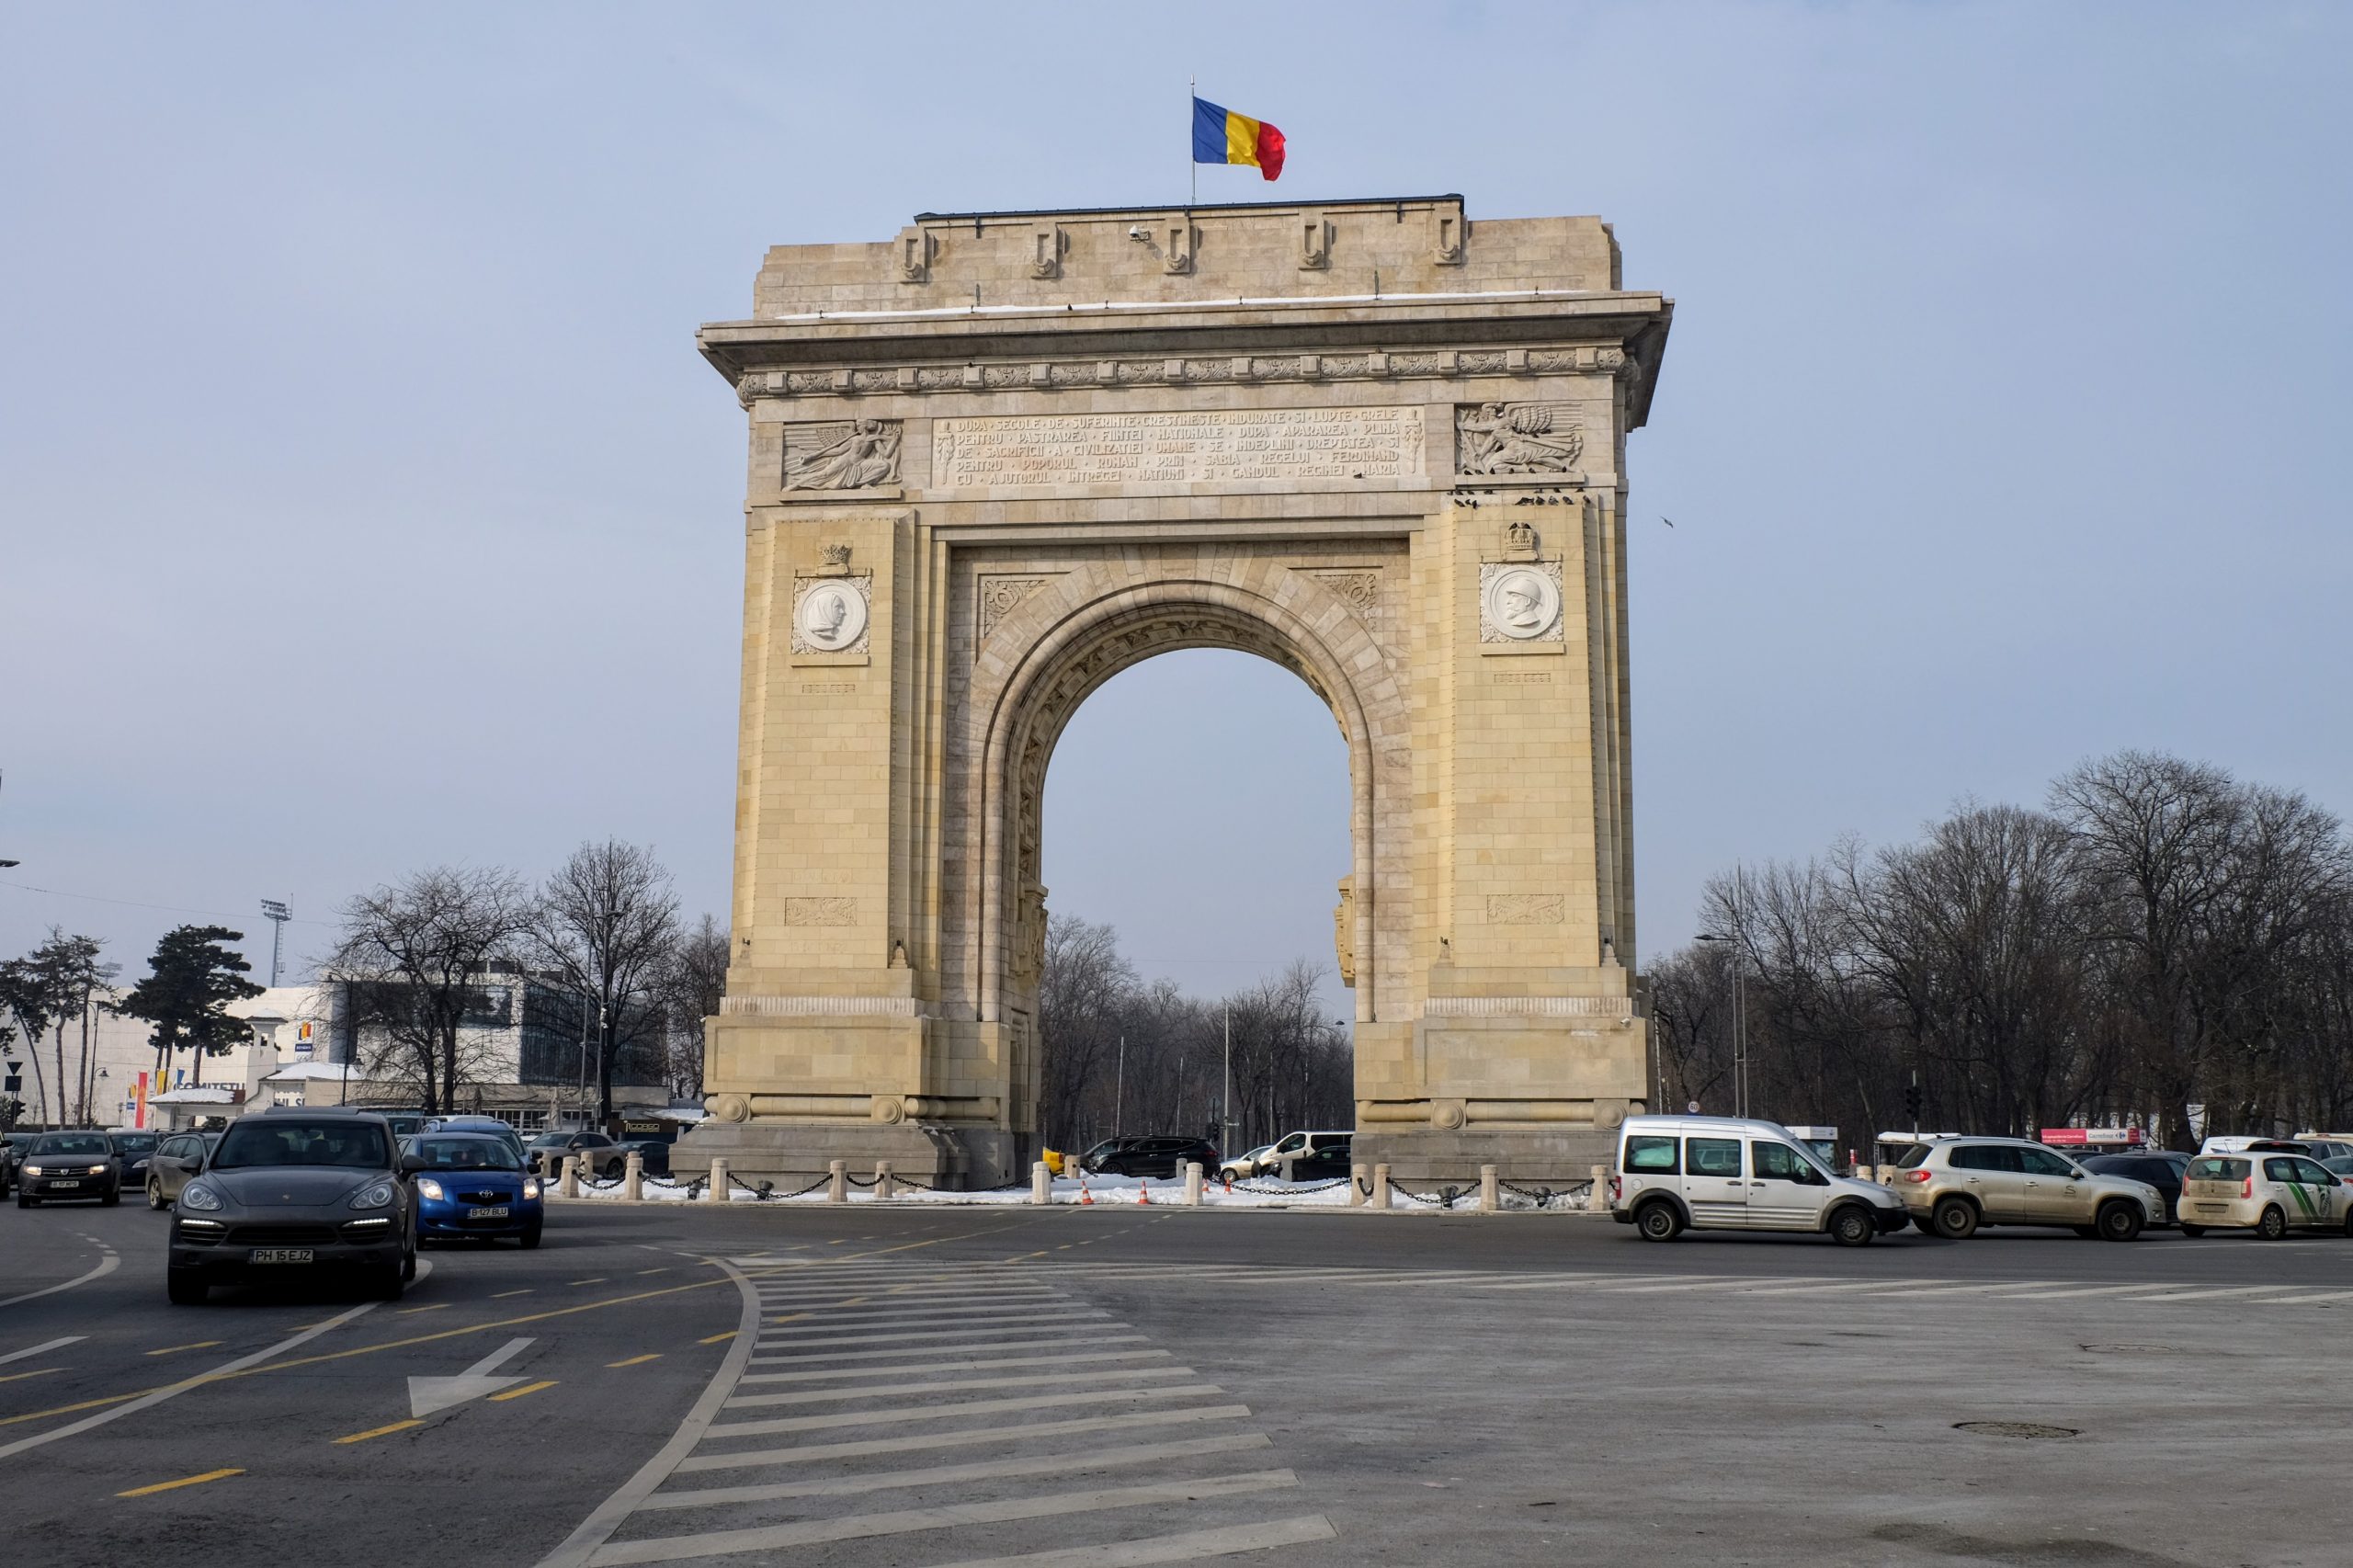 Arc de Triumf in Bucharest in Romania